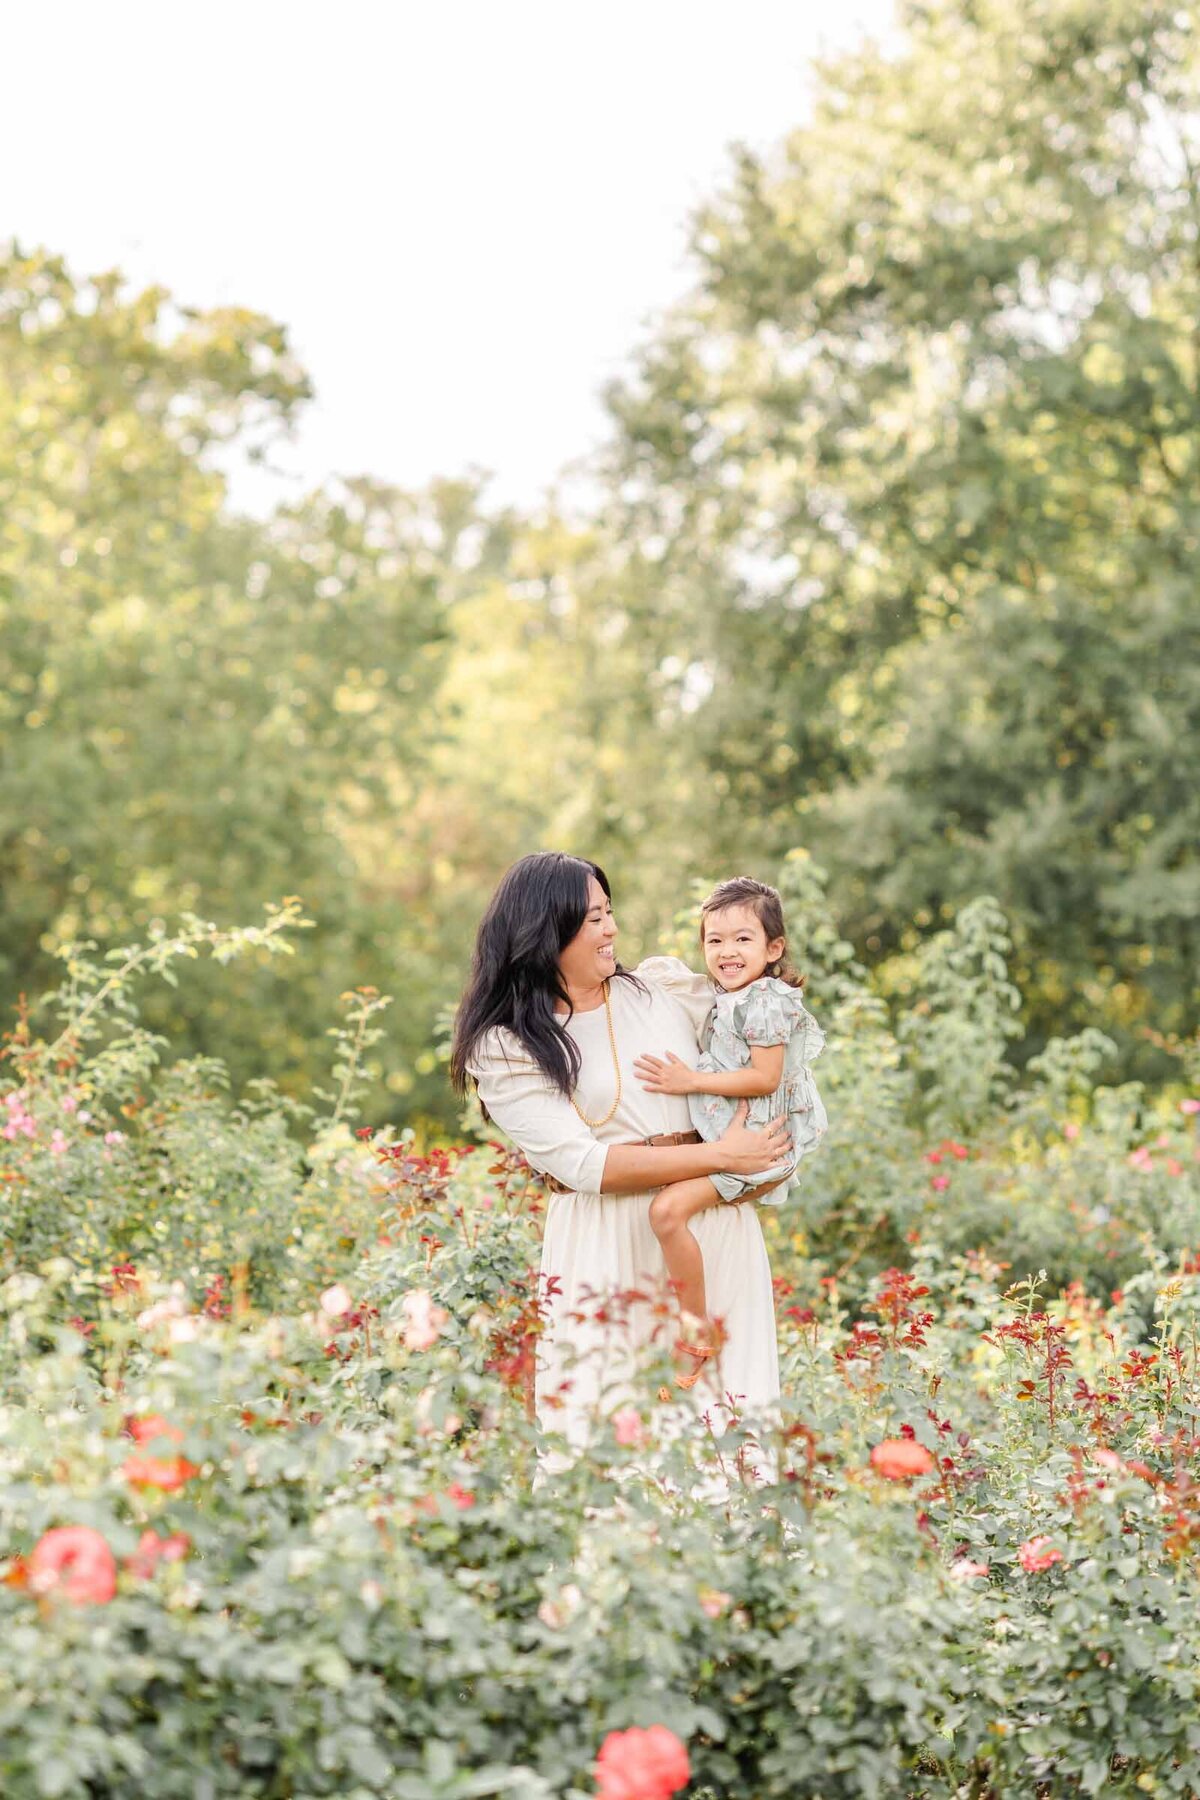 Rose Garden Mommy & Me Arlington VA -Heidi Fam Photography